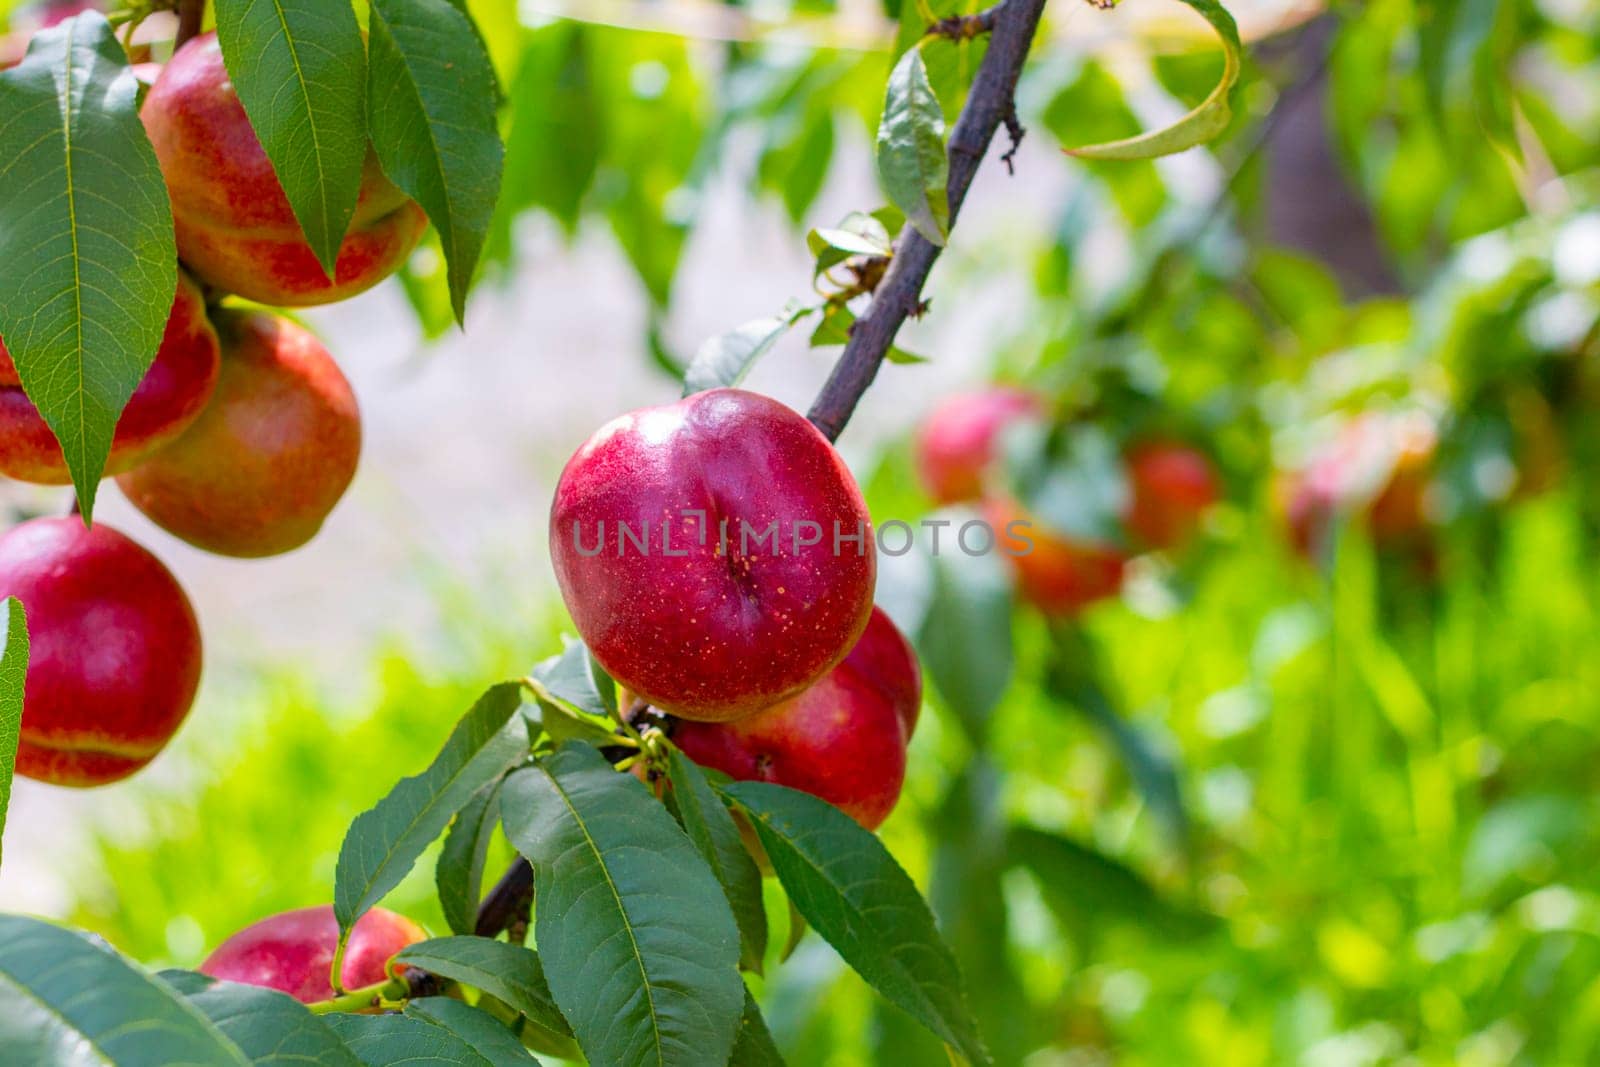 Fresh nectarine peaches growing on branch. Fresh organic natural fruit in sun light blur green background